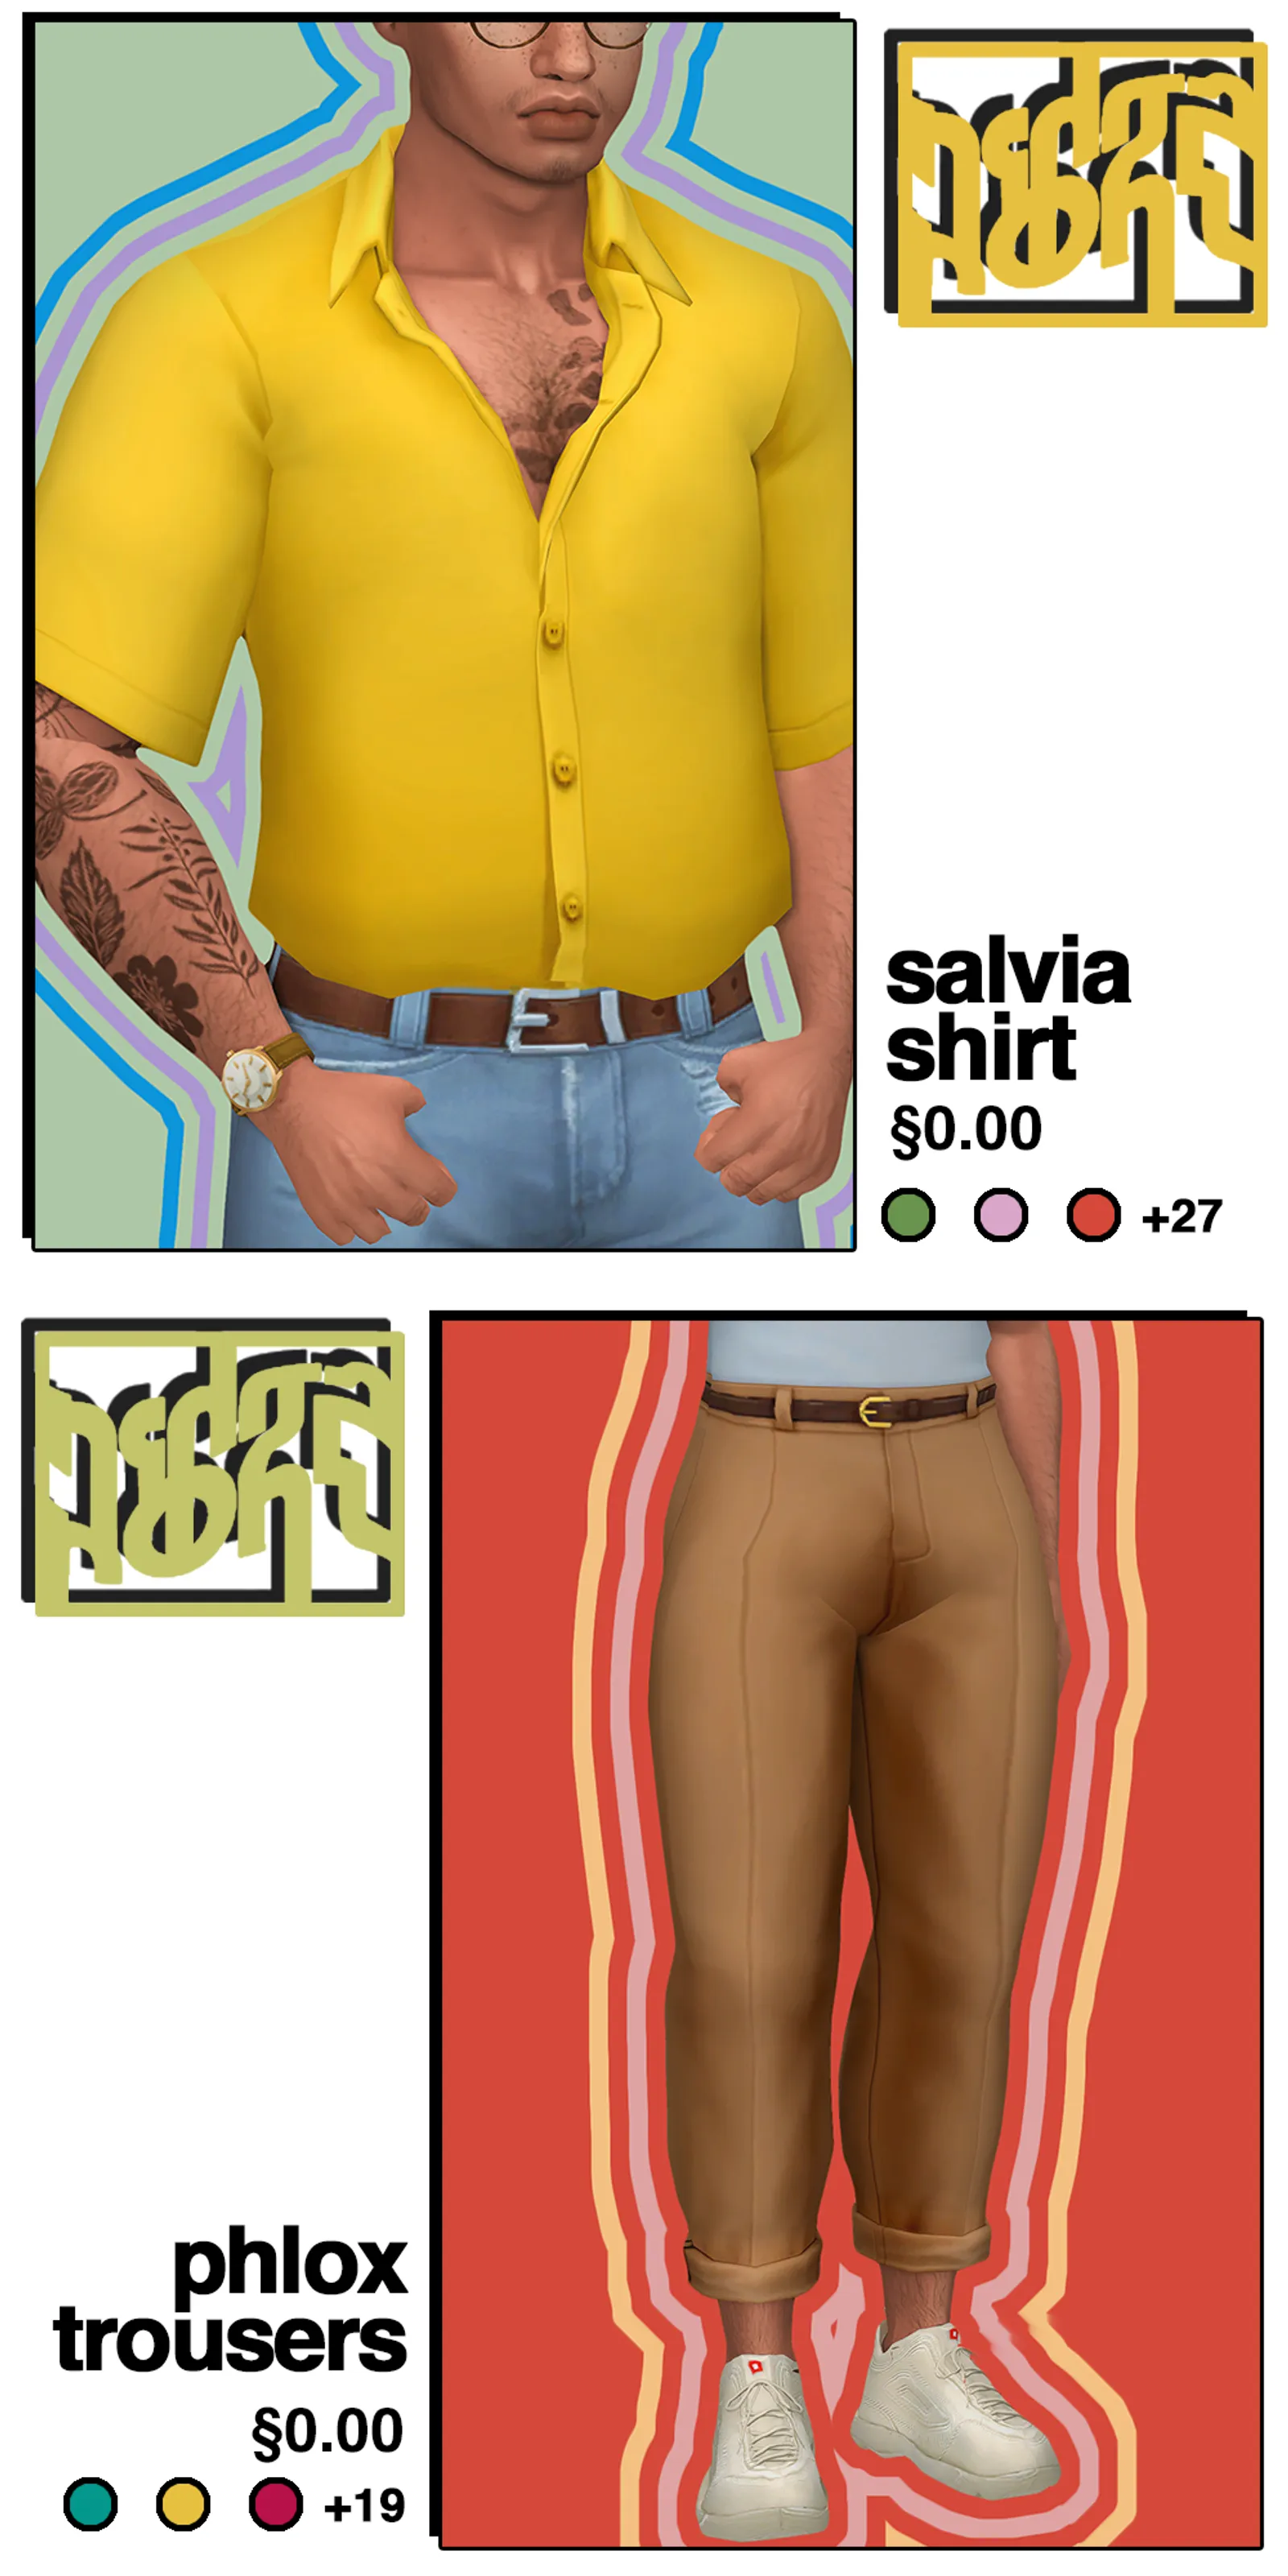 salvia shirt & phlox trousers •